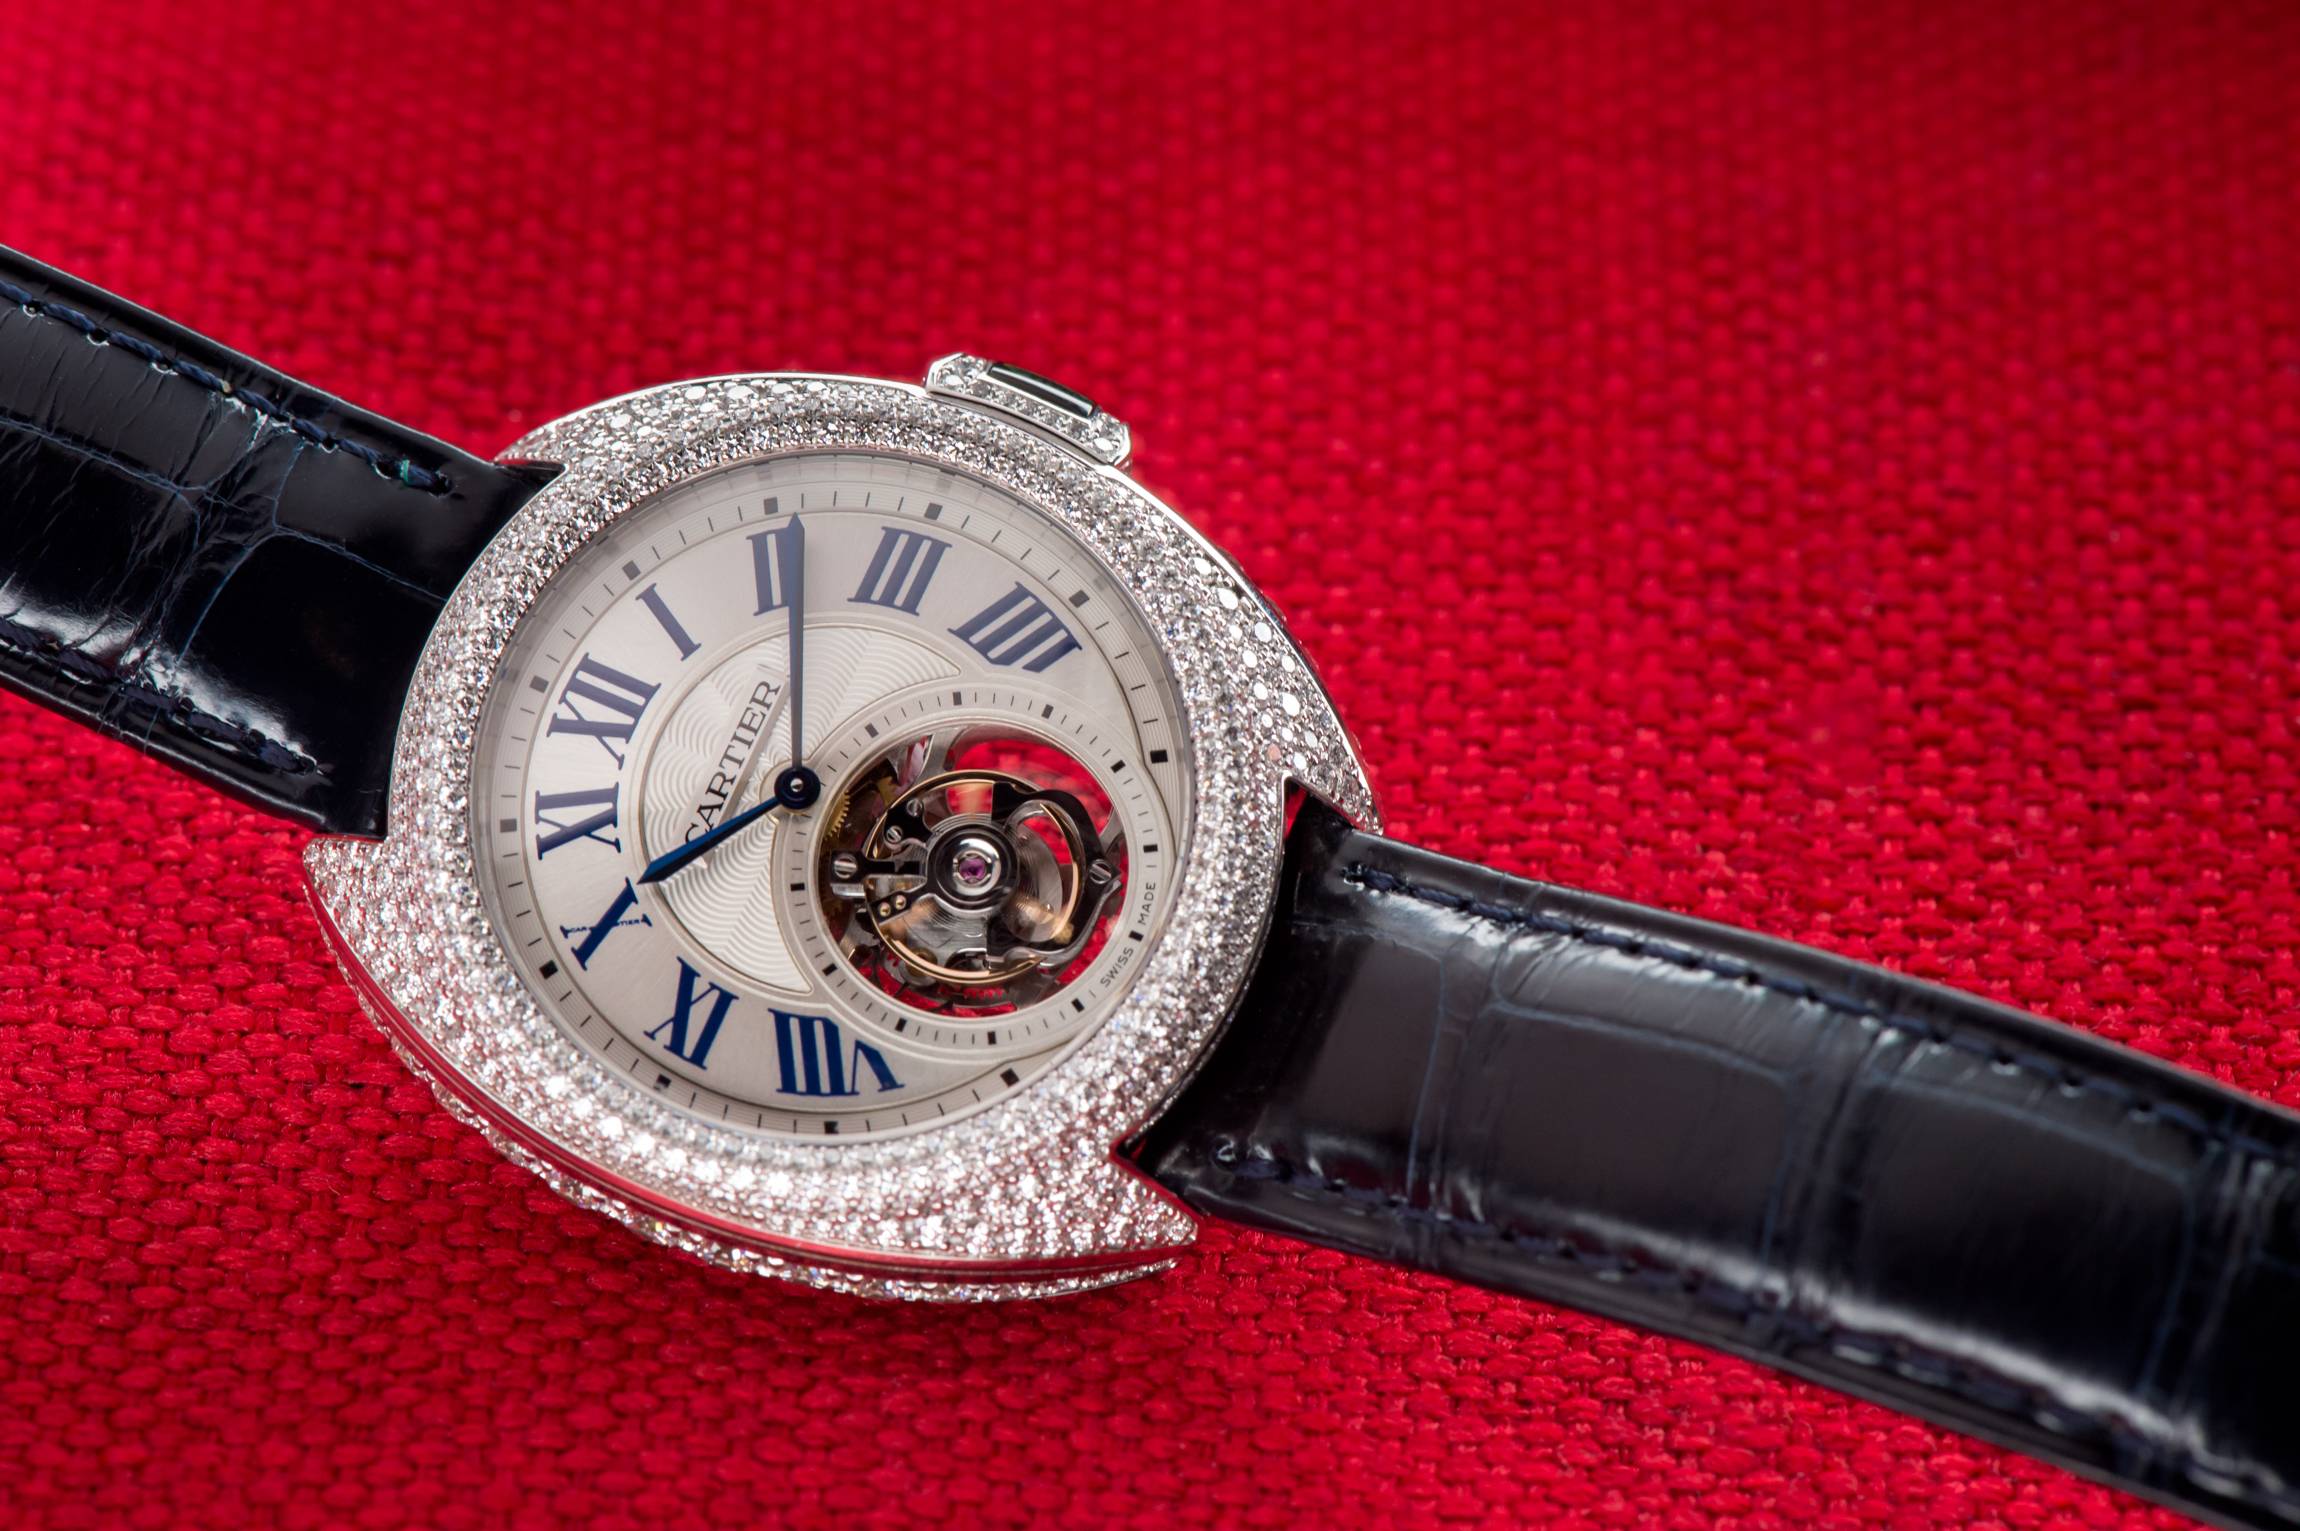 Clé De Cartier Diamond Watch 2015